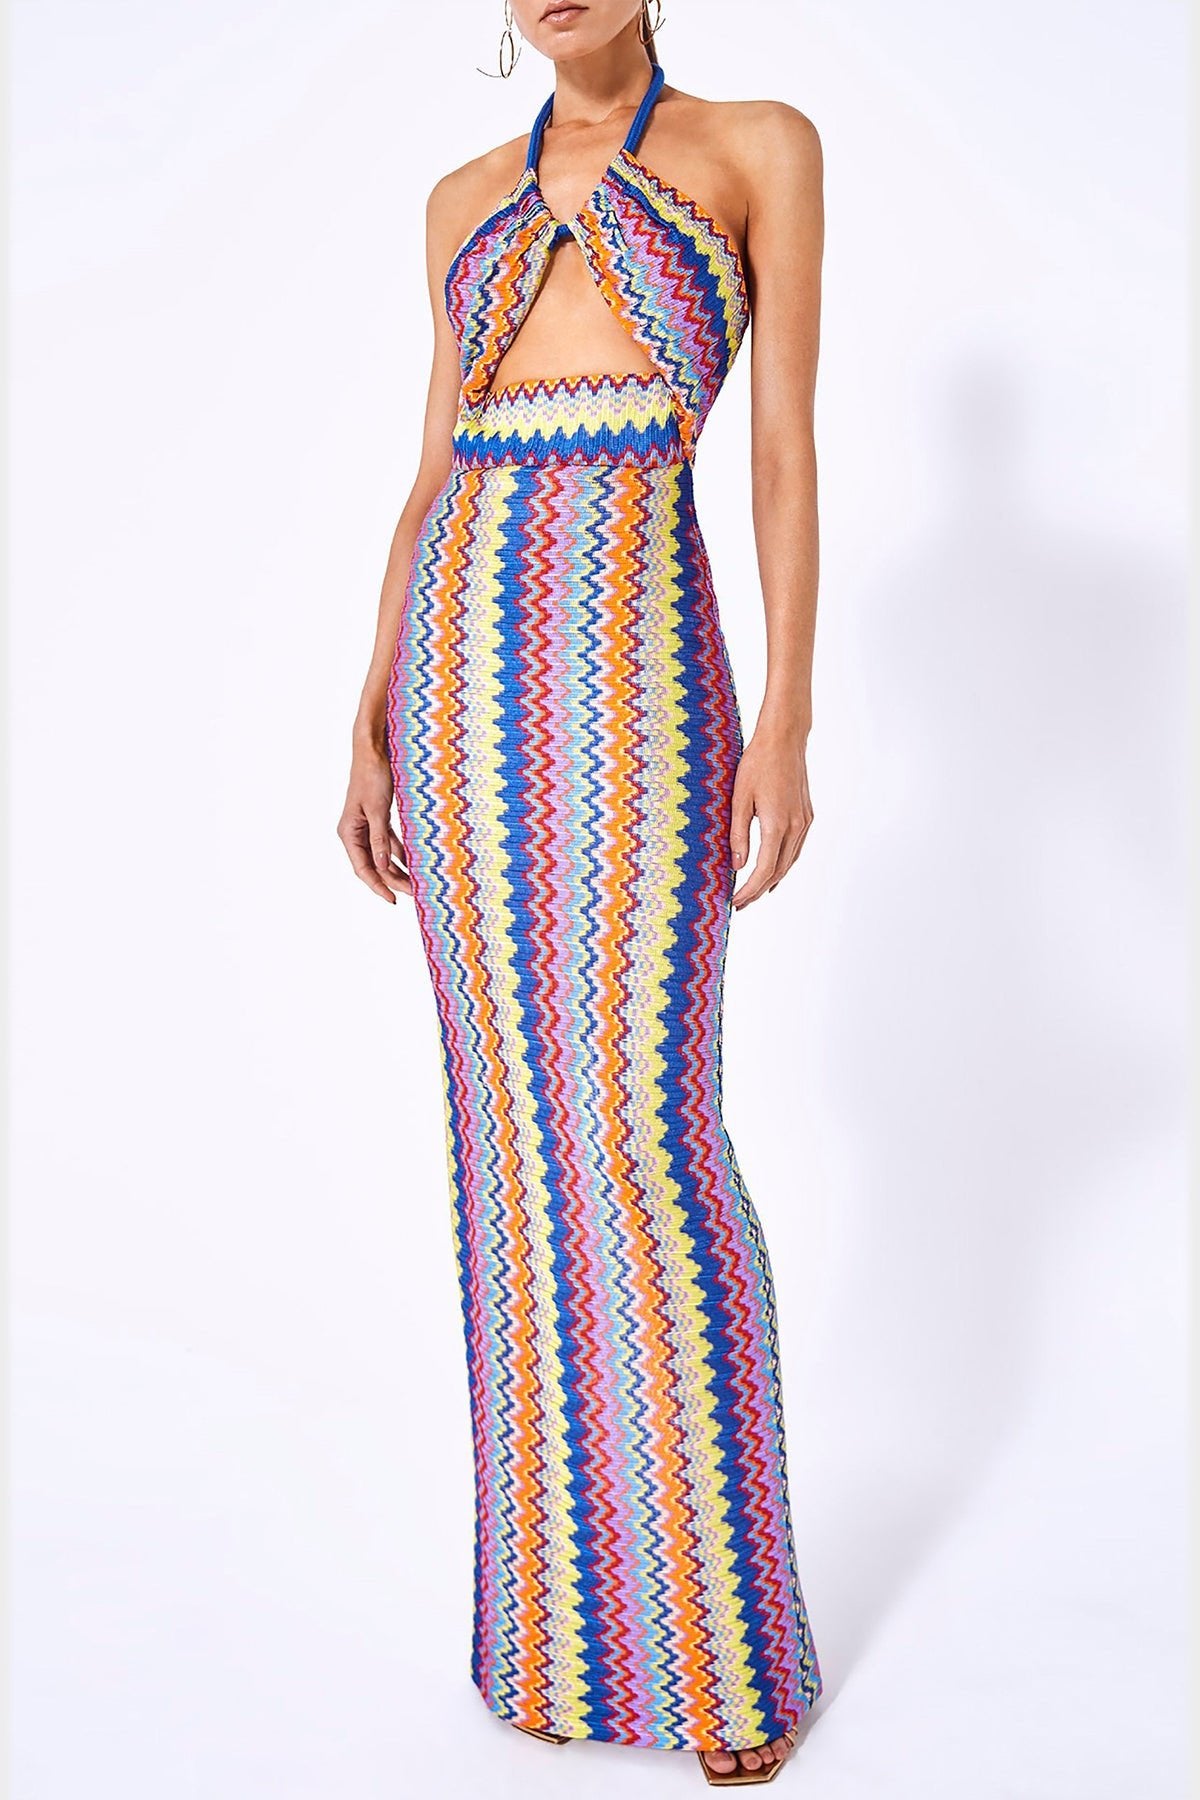 Vedette Maxi Dress in Sunrise Knit - shop-olivia.com